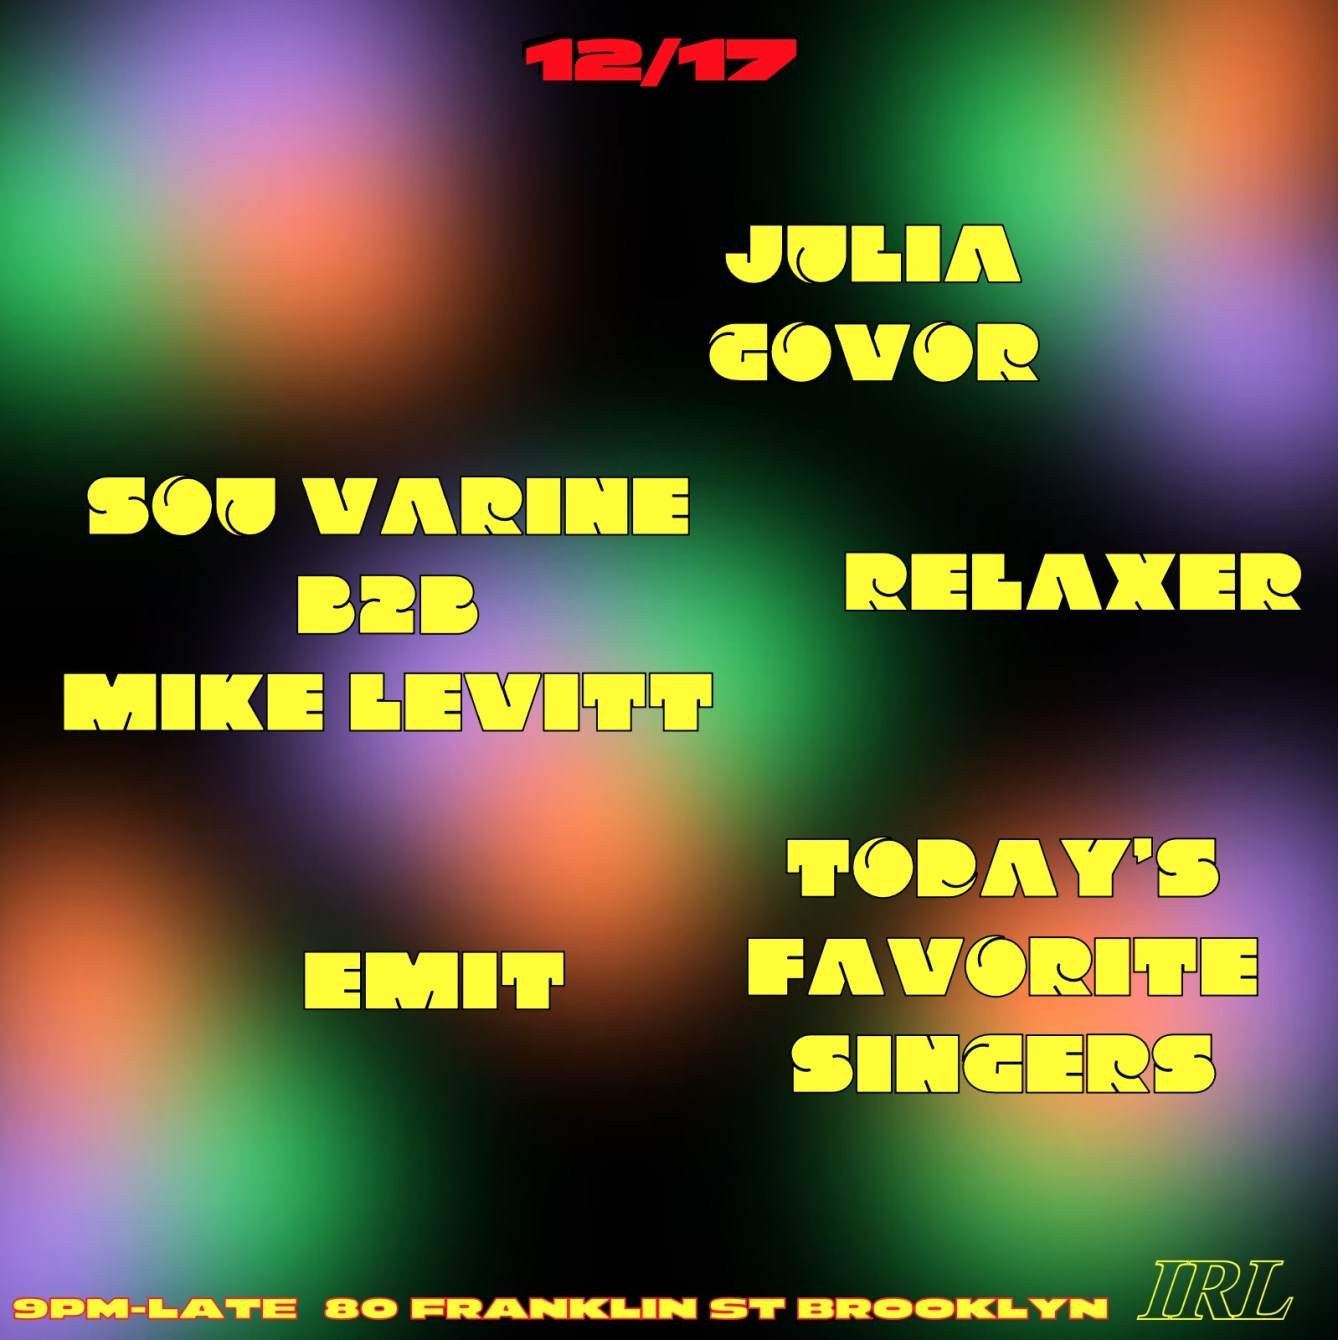 [CANCELLED] Julia Govor, Relaxer, Emit, Sou Varine b2b Mike Levitt, Today's Favorite Singers - Página frontal